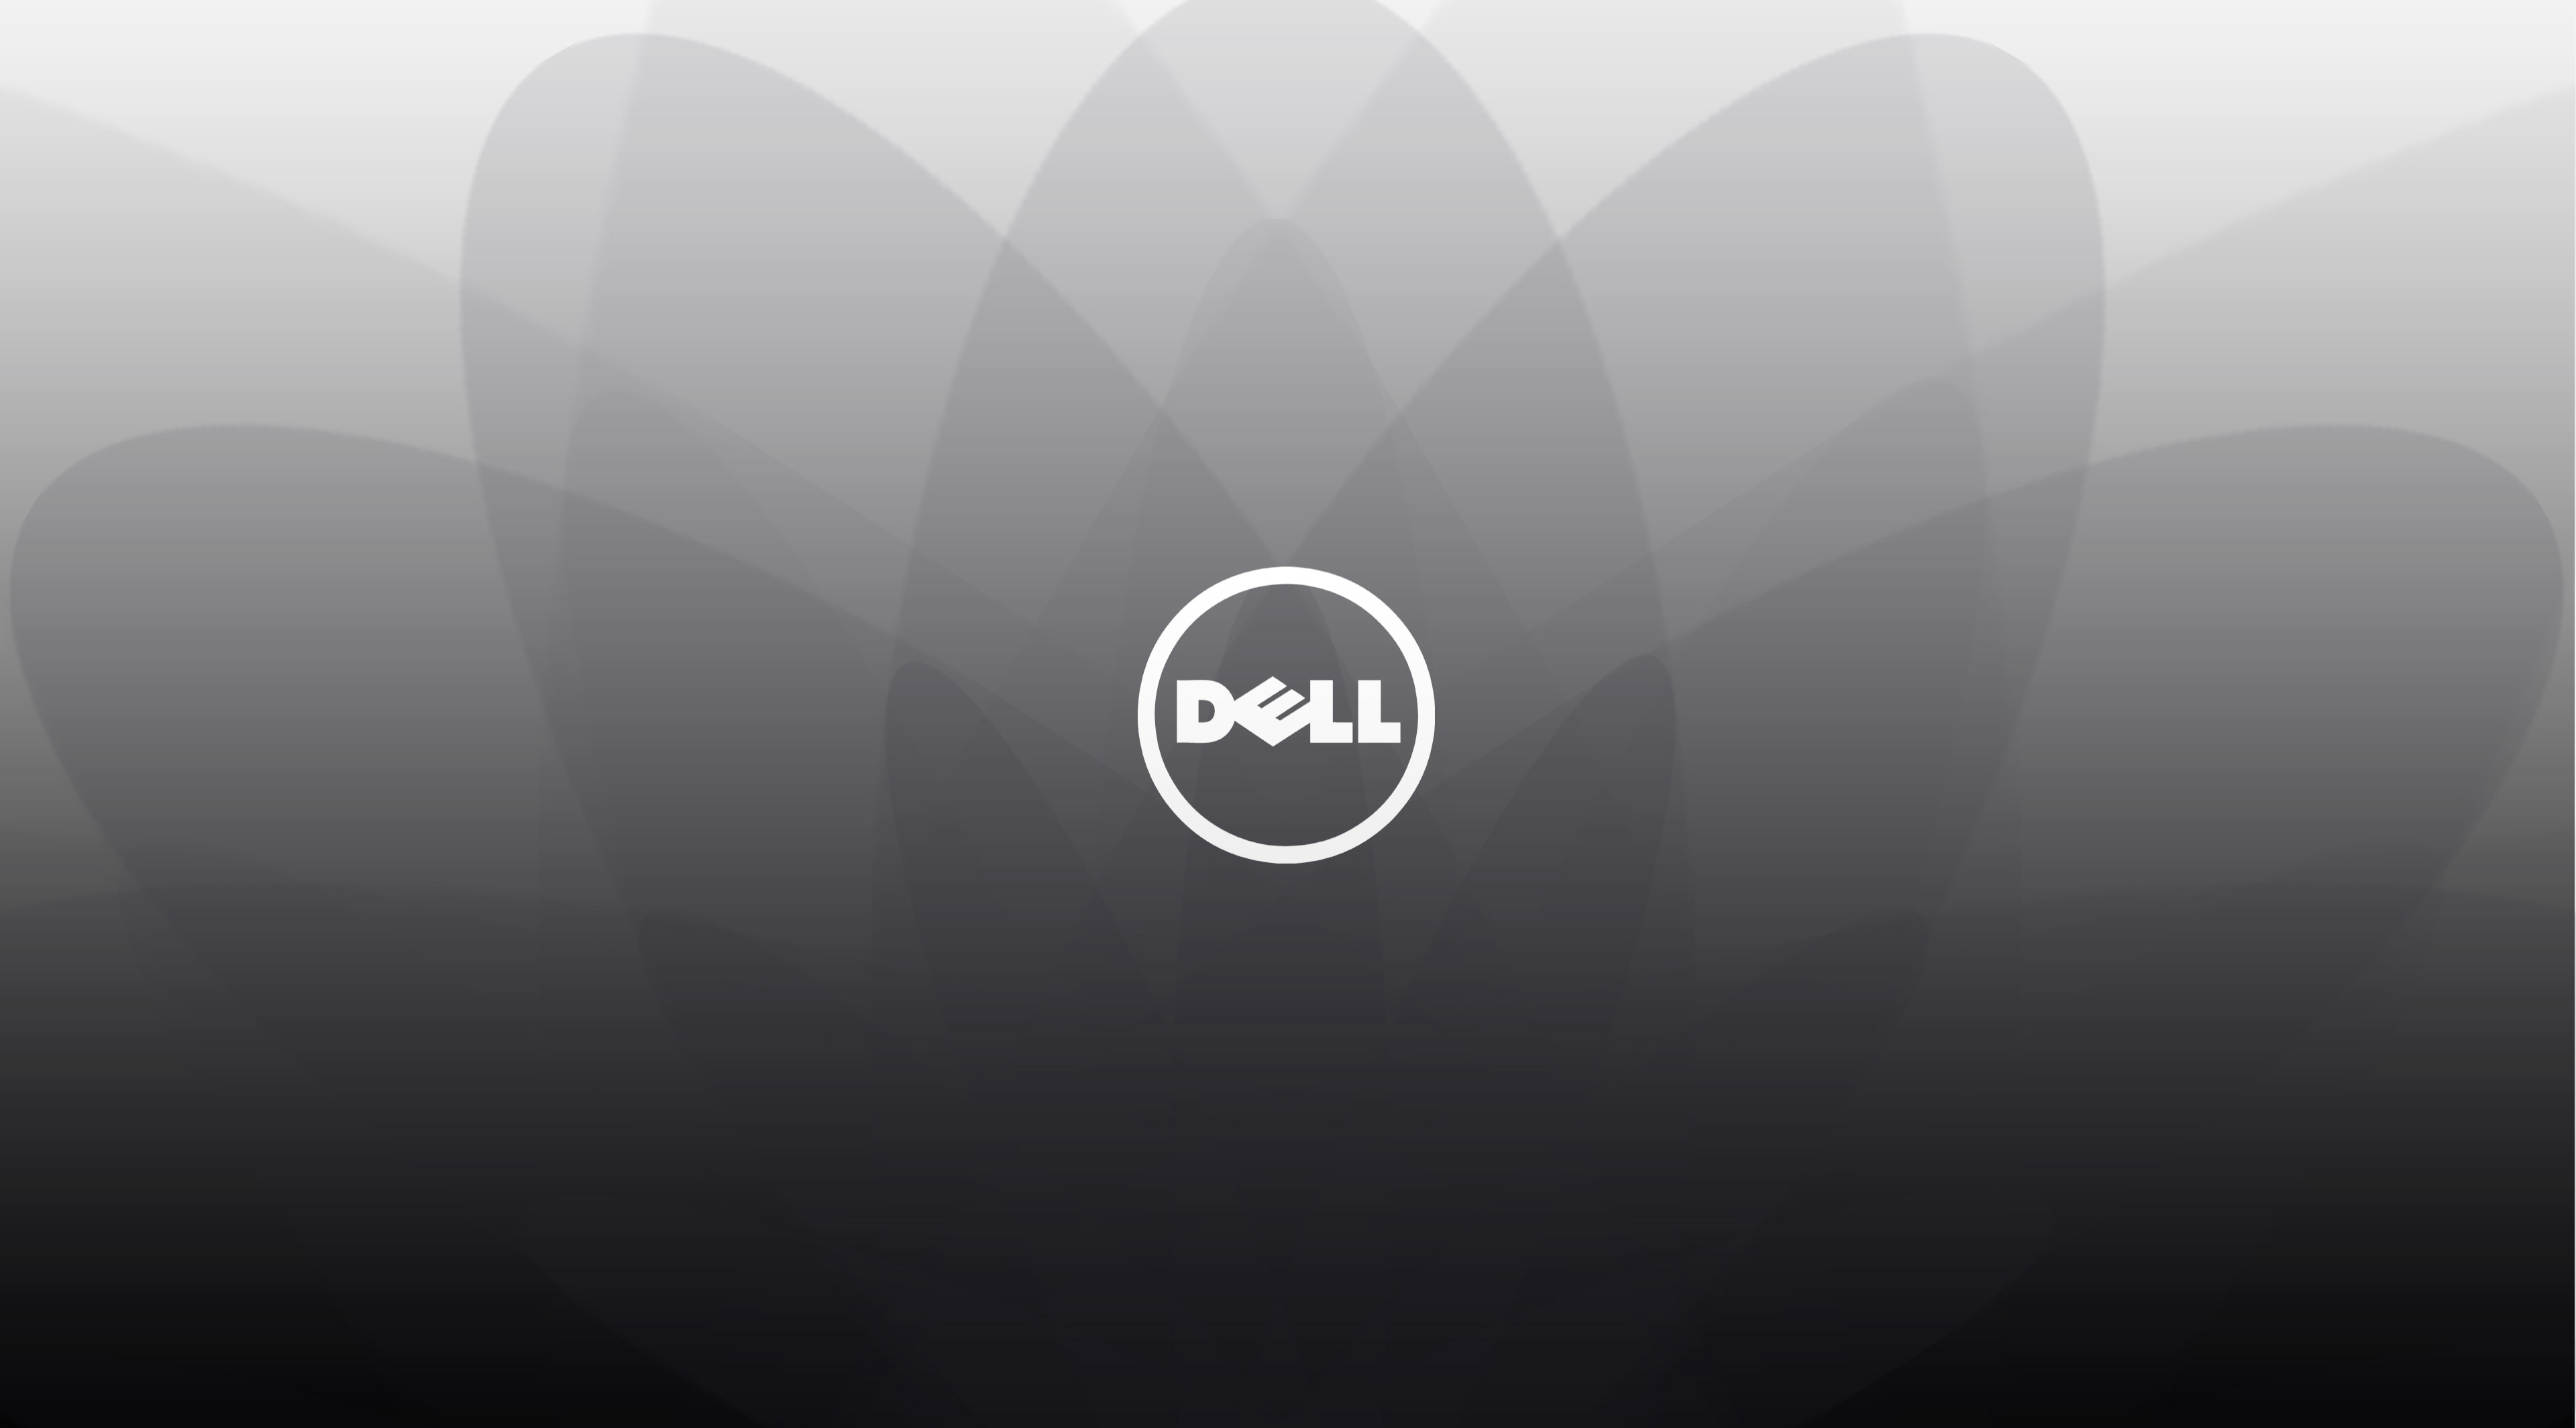 3840x2128 Dell Desktop Backgrounds | HD Wallpapers | Pinterest | Dell desktop,  Desktop backgrounds and 3d wallpaper